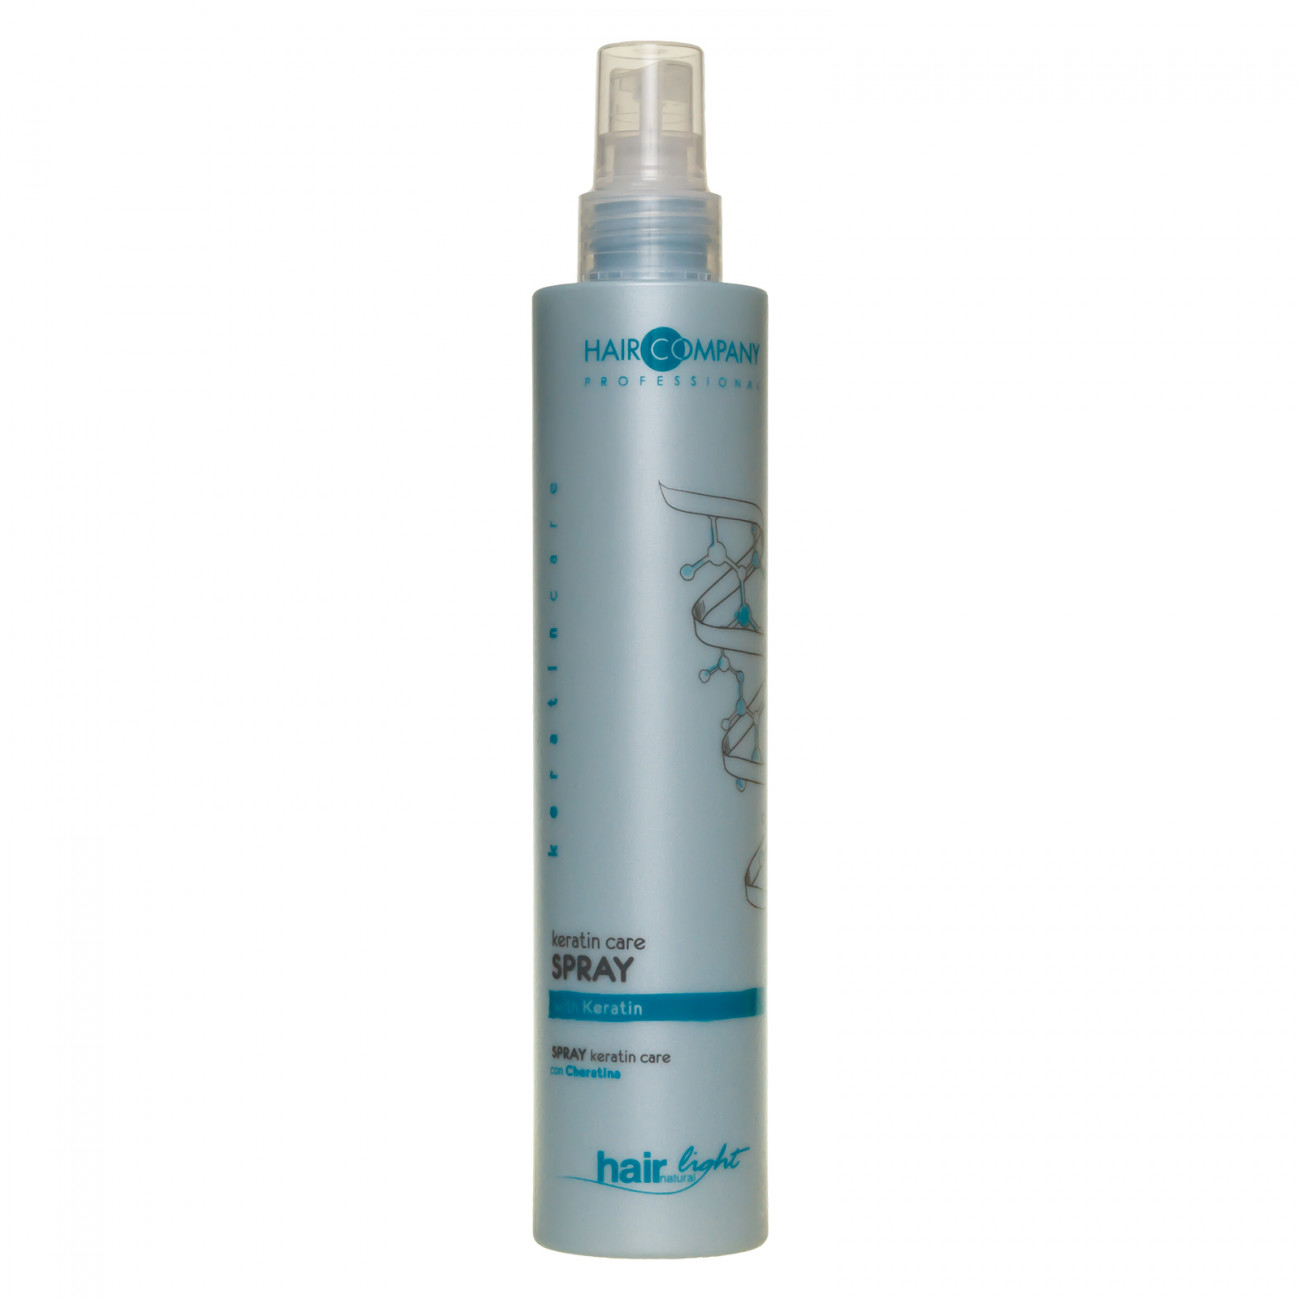 Hair Company Professional Light Keratin Care Spray - Спрей-уход для волос с кератином 250 мл Hair Company Professional (Италия) купить по цене 828 руб.